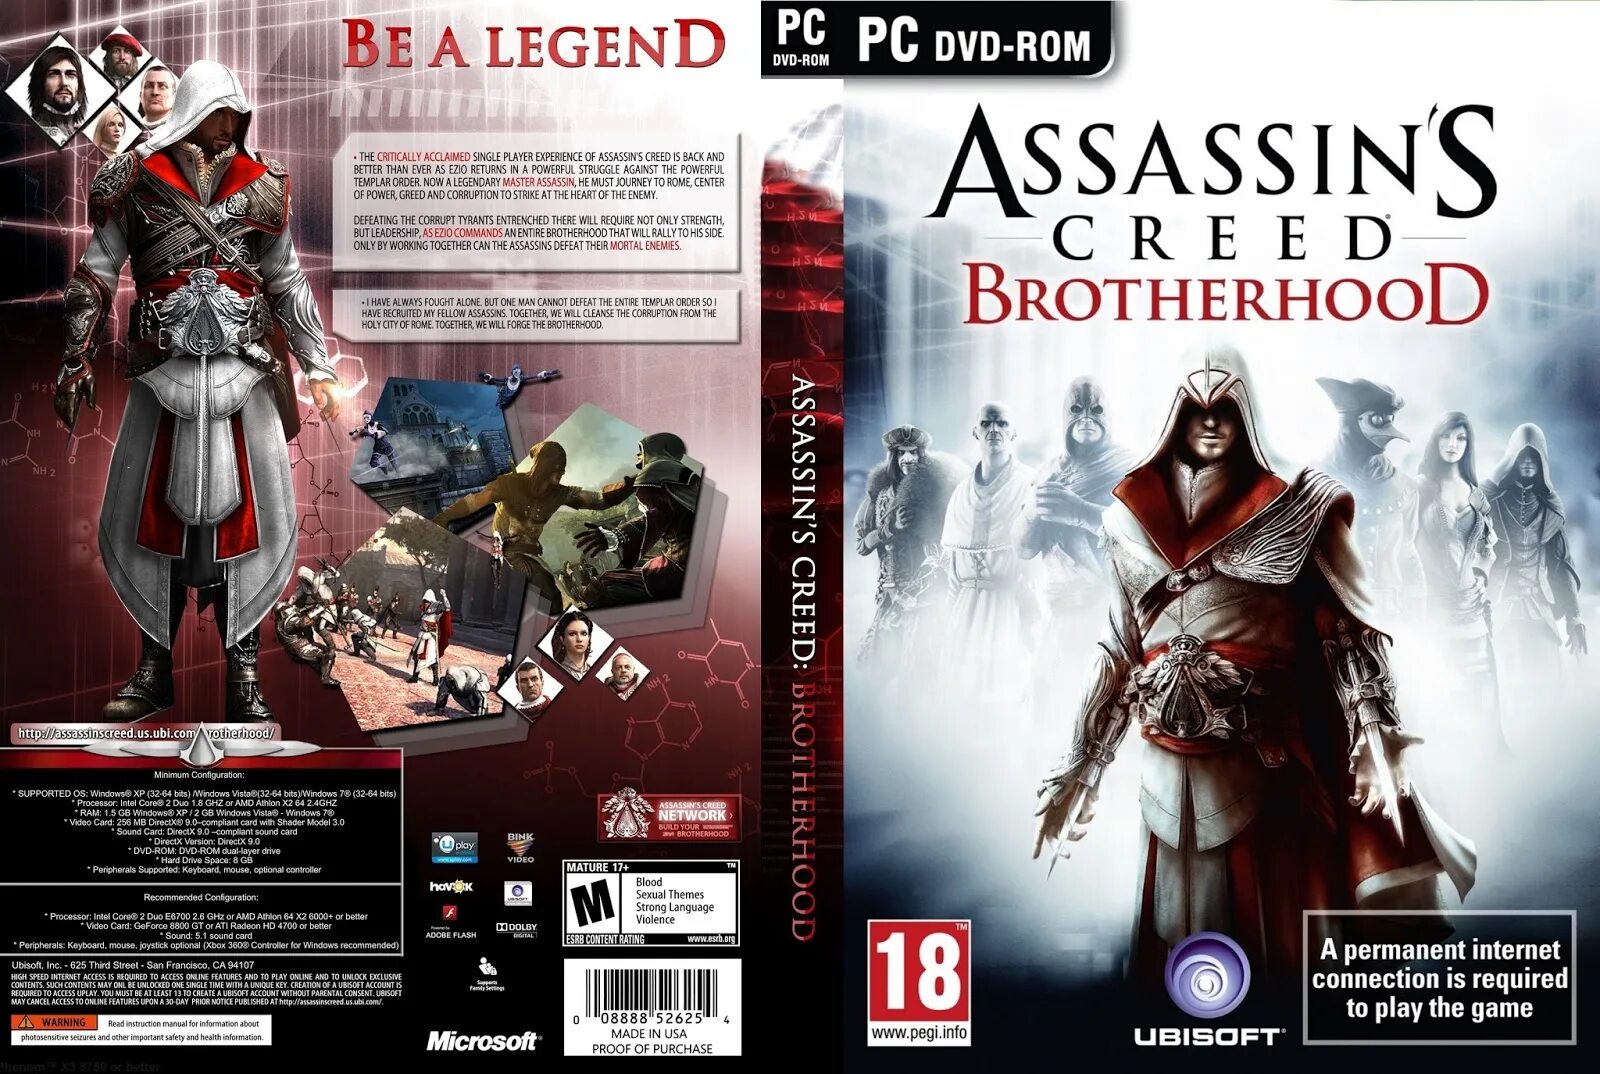 Ассасин Крид братство крови обложка. Обложка ассасин бразерхуд. Диск с игрой ассасин Крид для ПК. Assassins Creed Brotherhood Xbox 360 обложка.